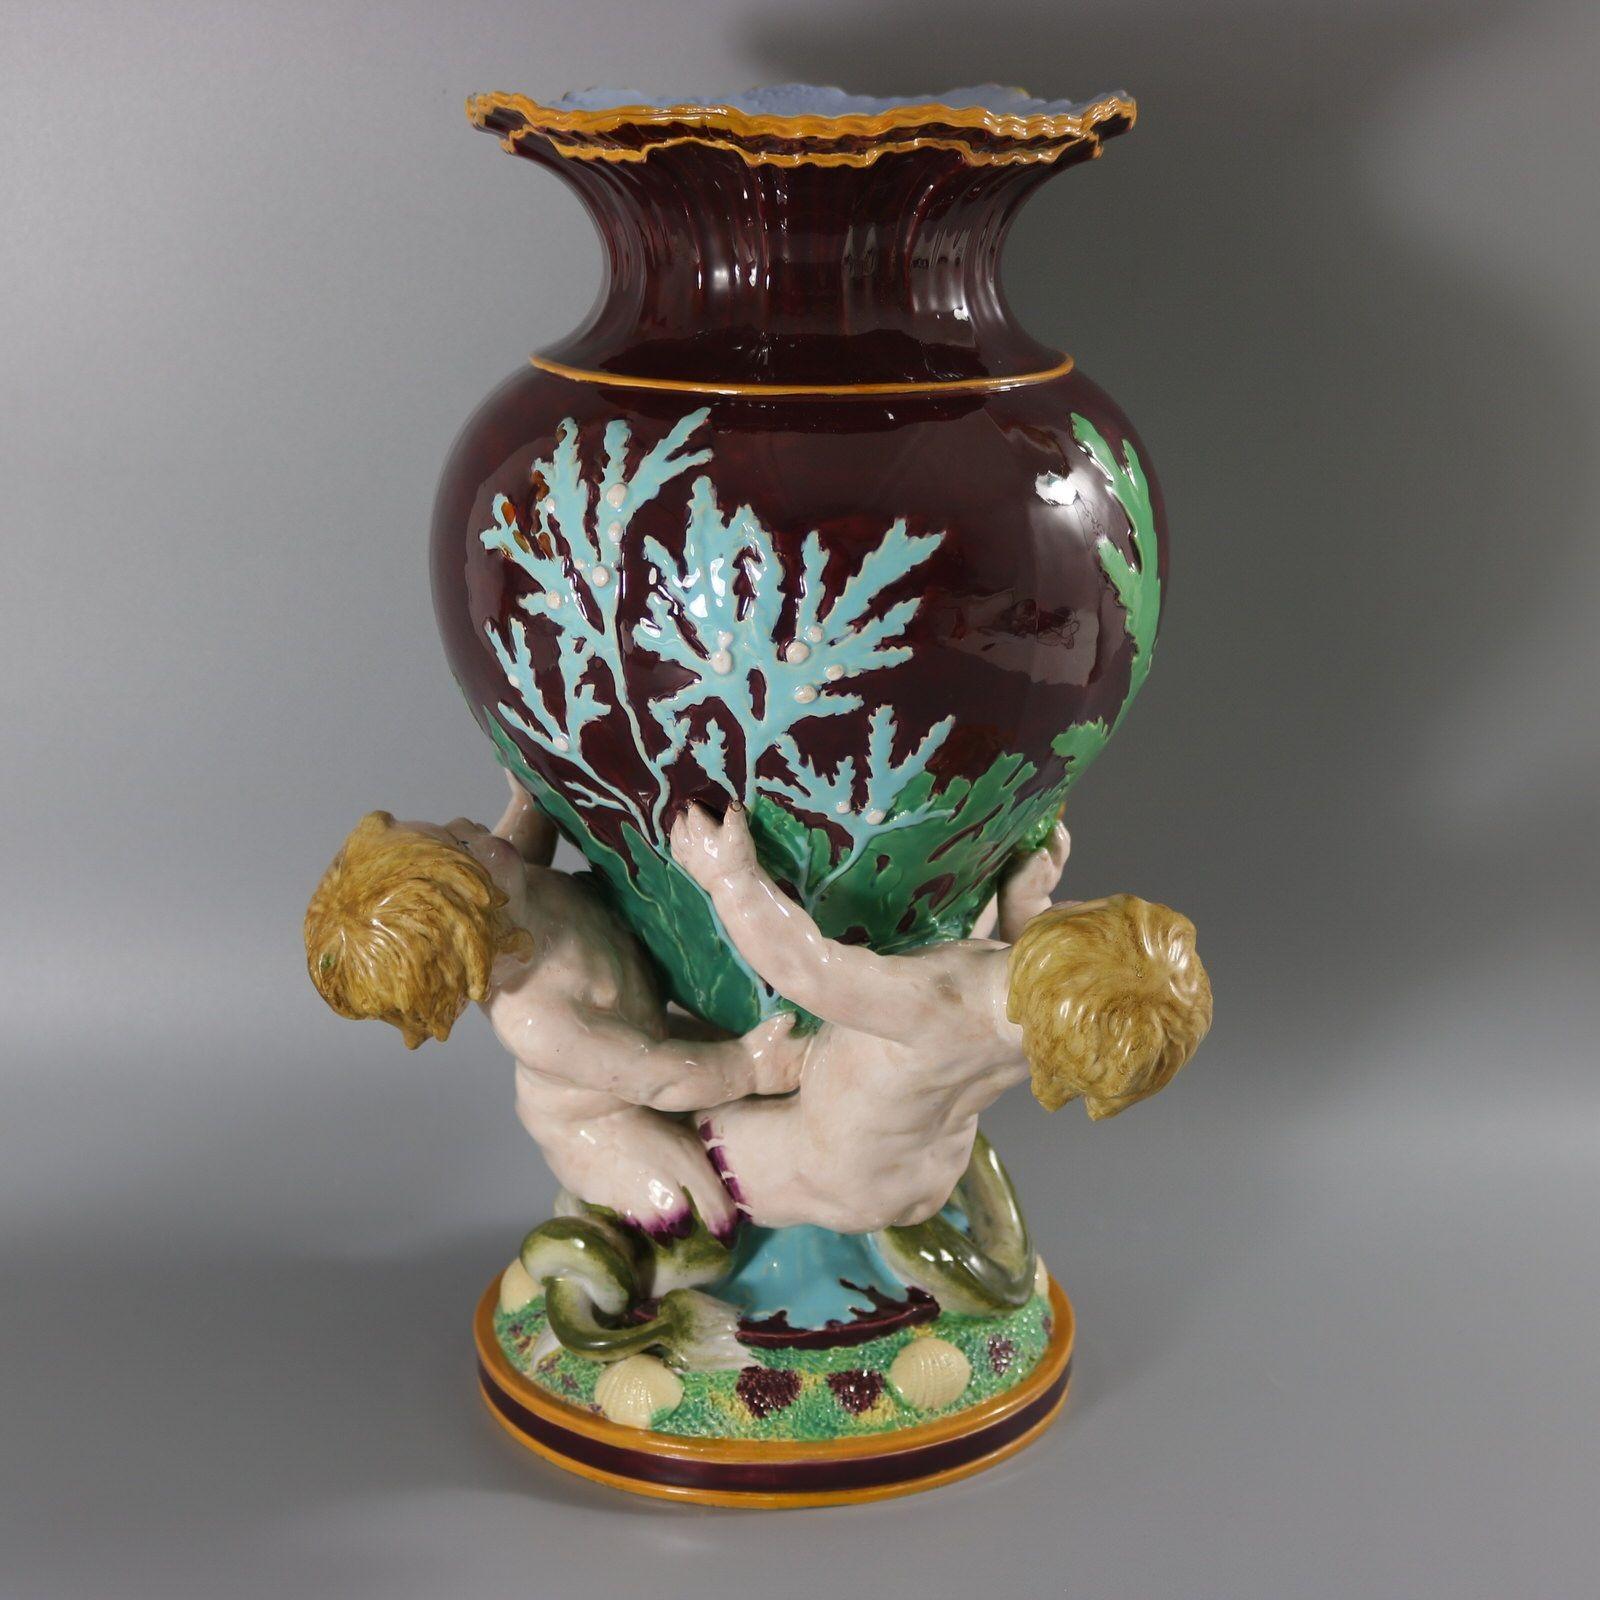 Mid-19th Century Minton Majolica Marine Vase with Merboys For Sale